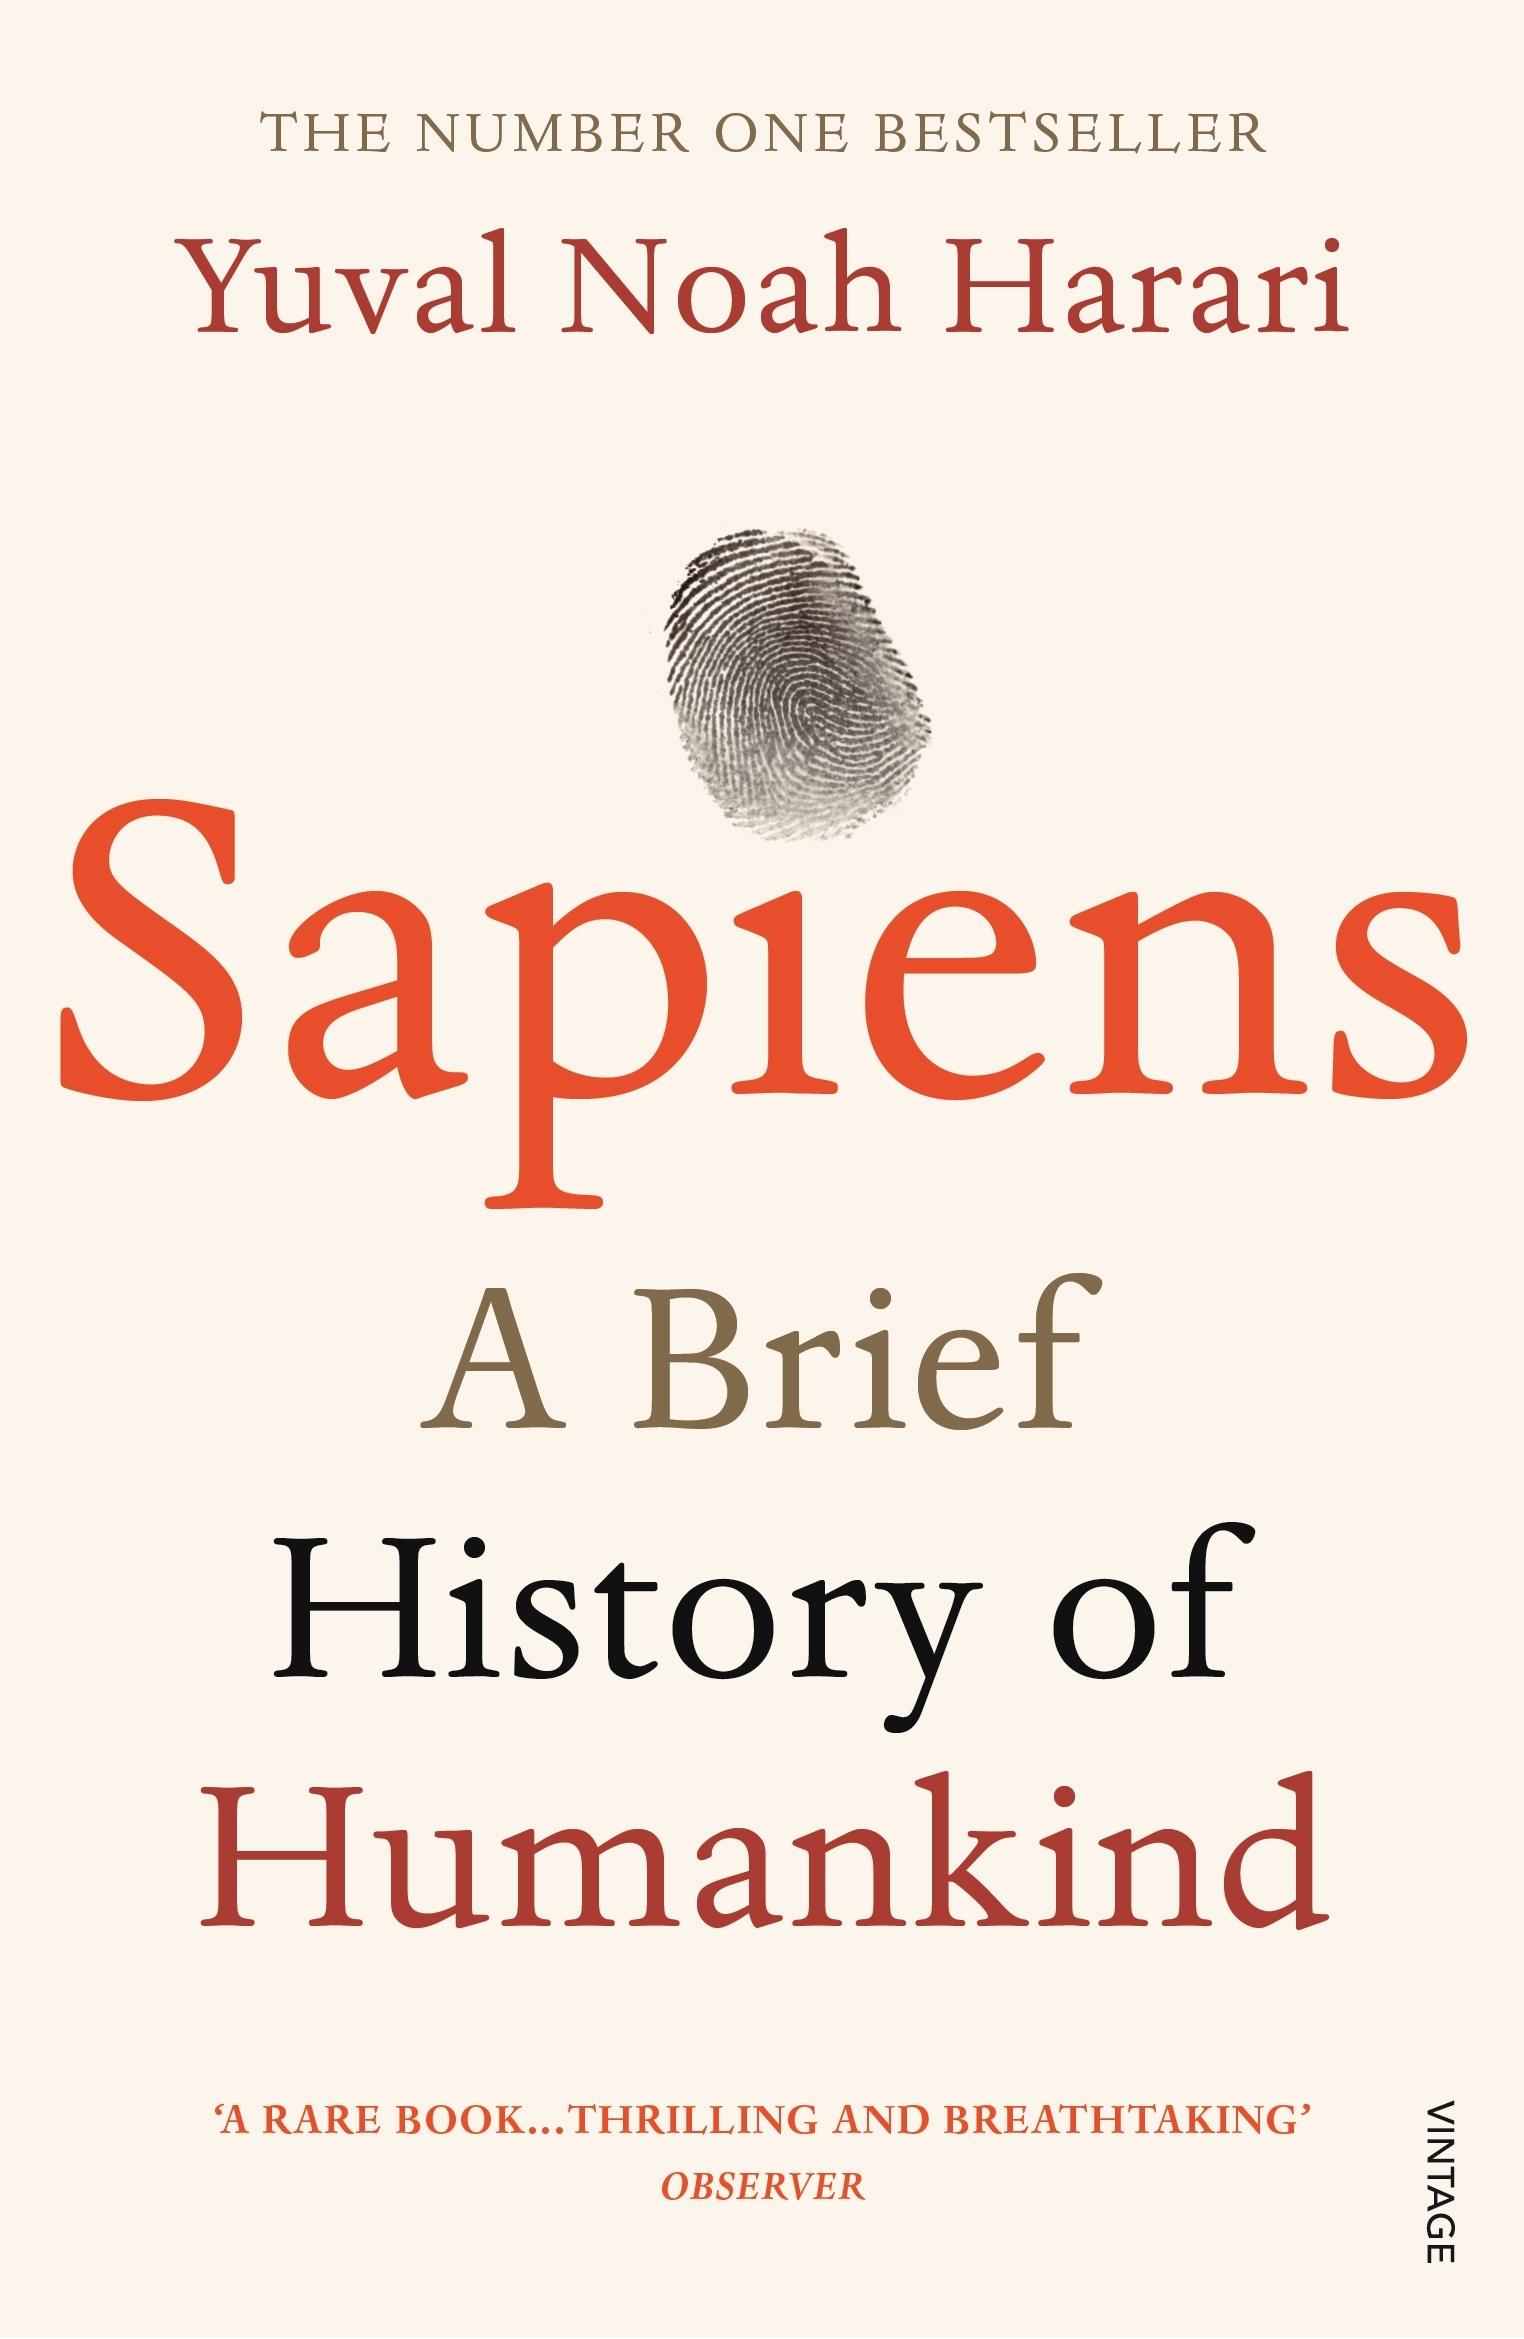 Yuval Noah Harari: Sapiens A brief Story of Human Kind (2011, Harper)